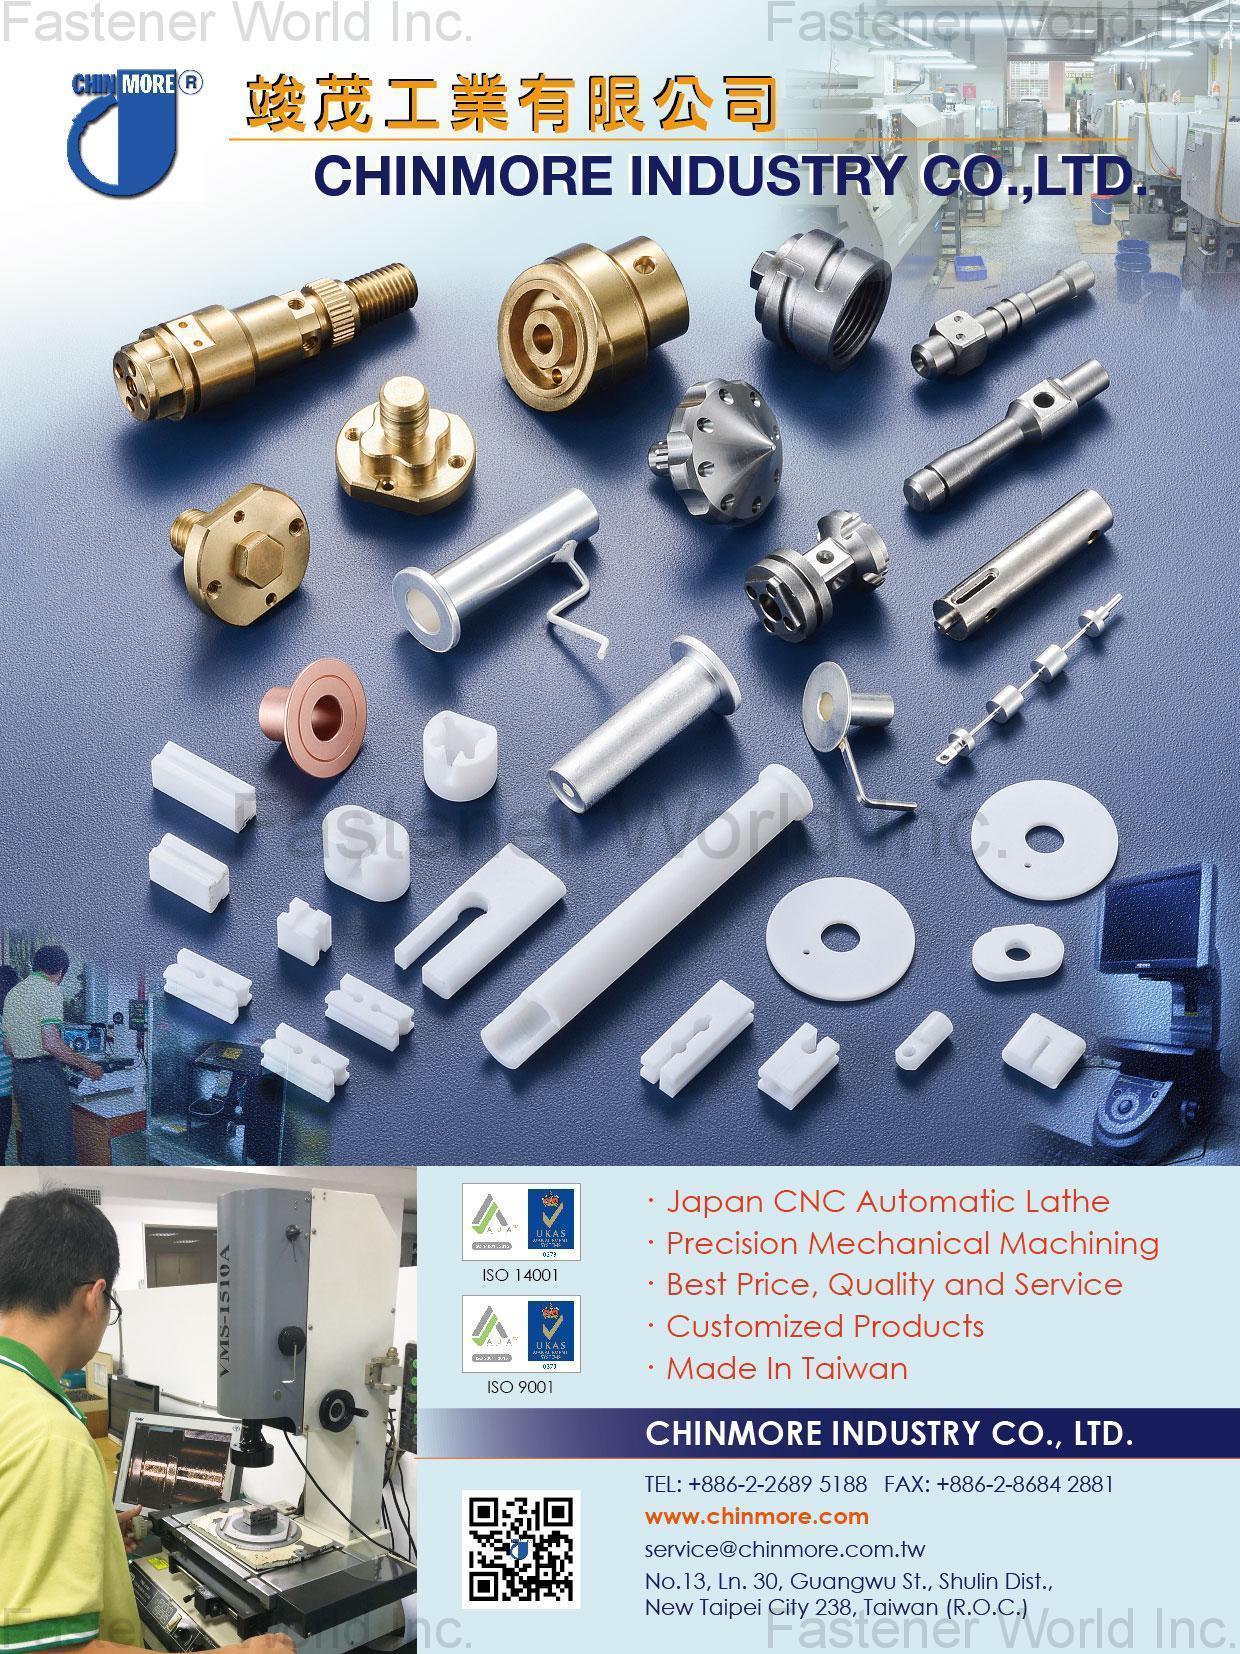 CHINMORE INDUSTRY CO., LTD. , CNC Automatic Lathe, Precision Mechanical Machining , CNC parts, CNC lathe